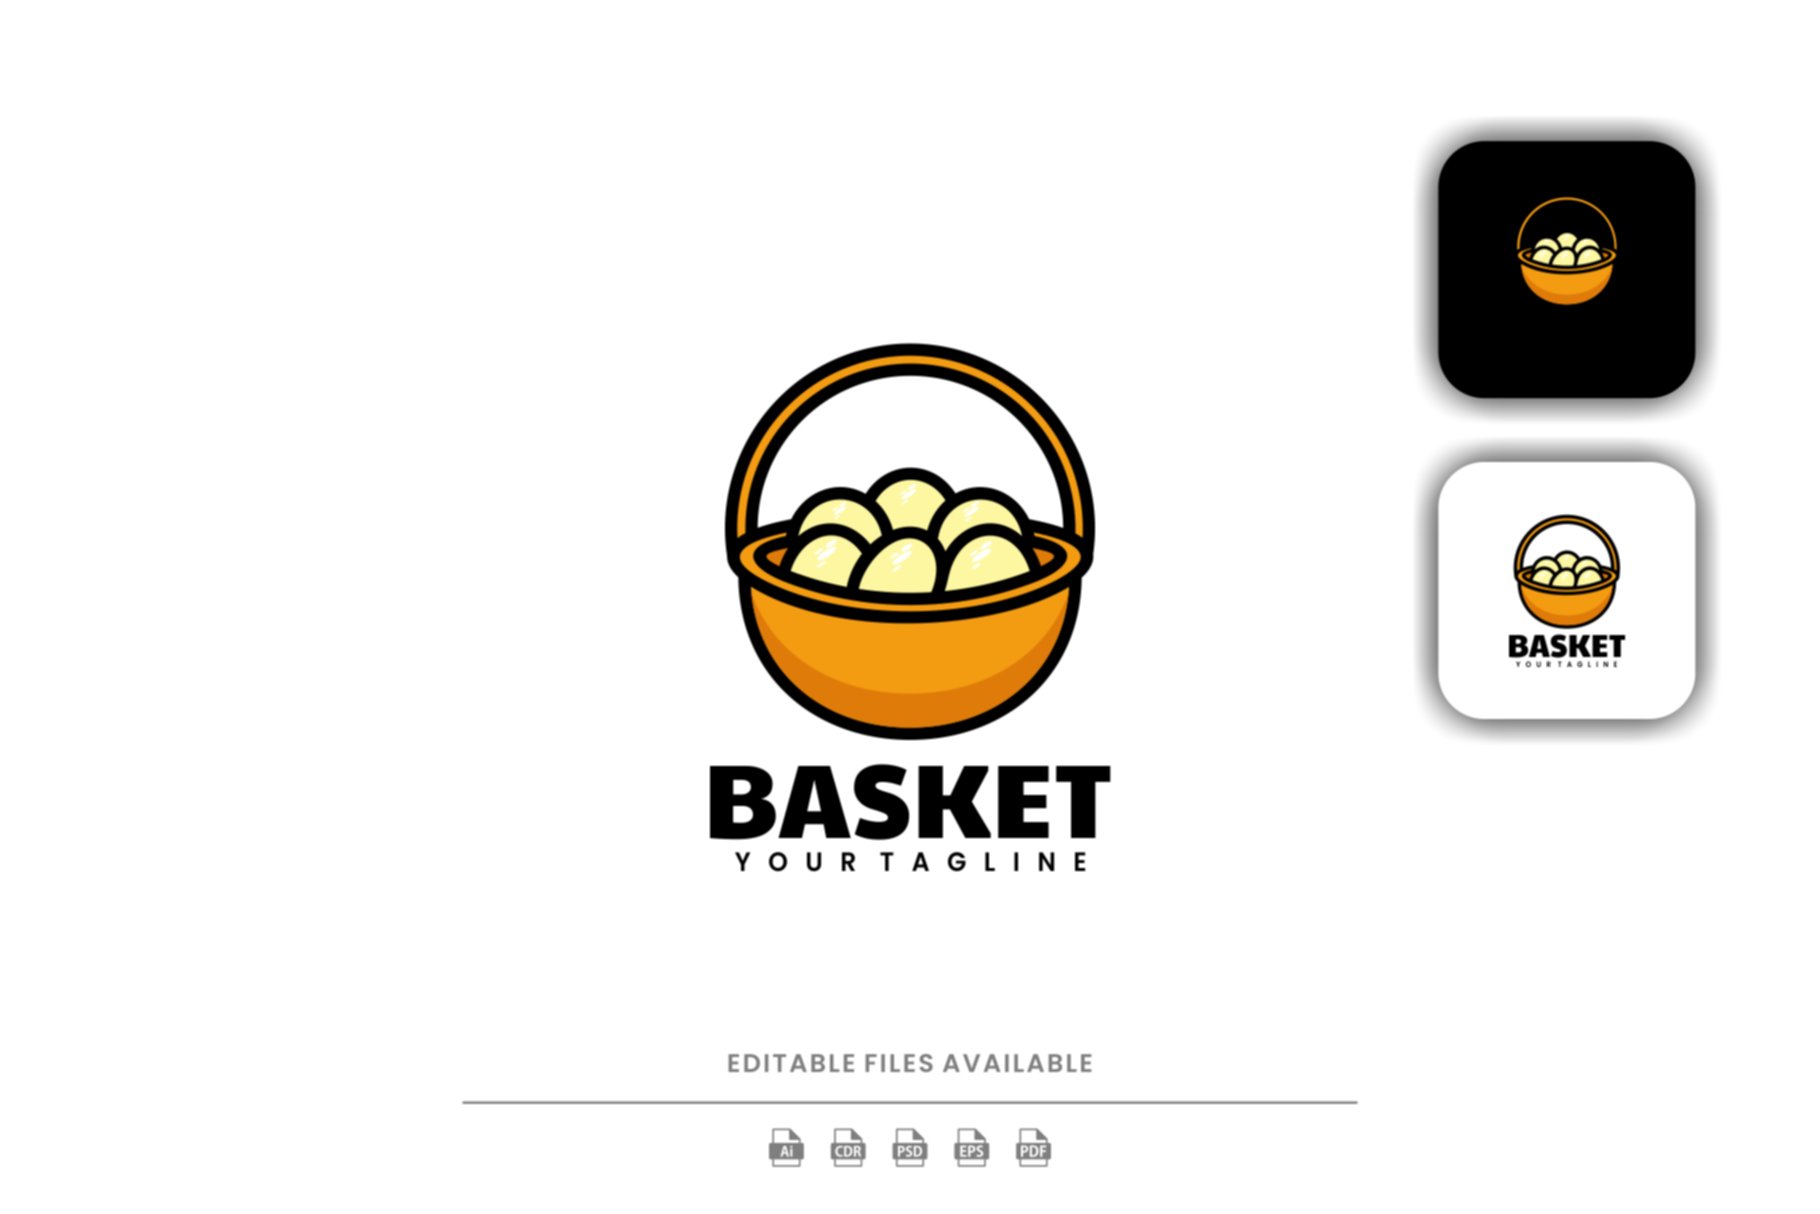 Basket Simple Mascot Logo cover image.